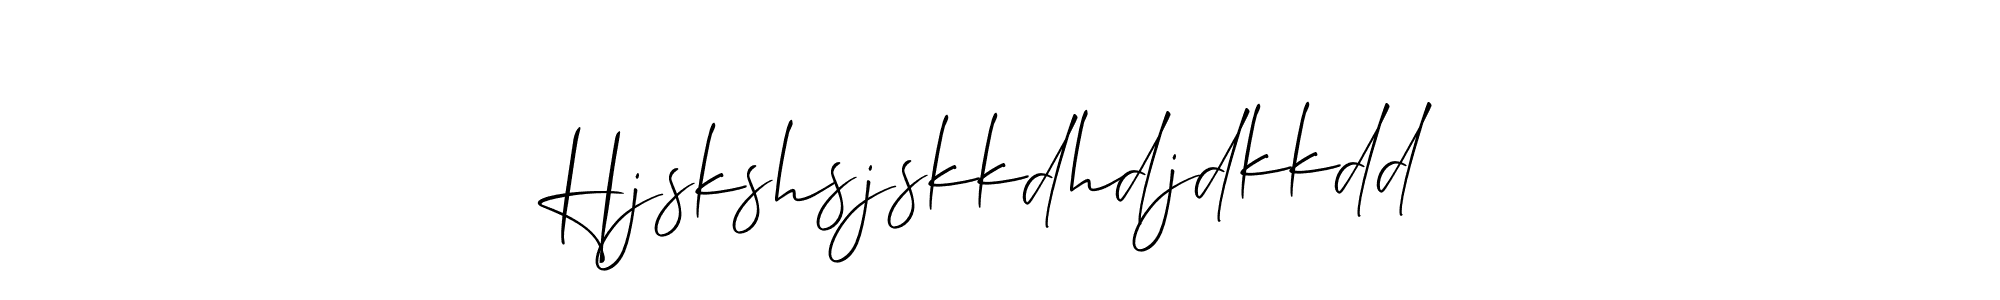 See photos of Hjskshsjskkdhdjdkkdd official signature by Spectra . Check more albums & portfolios. Read reviews & check more about Allison_Script font. Hjskshsjskkdhdjdkkdd signature style 2 images and pictures png